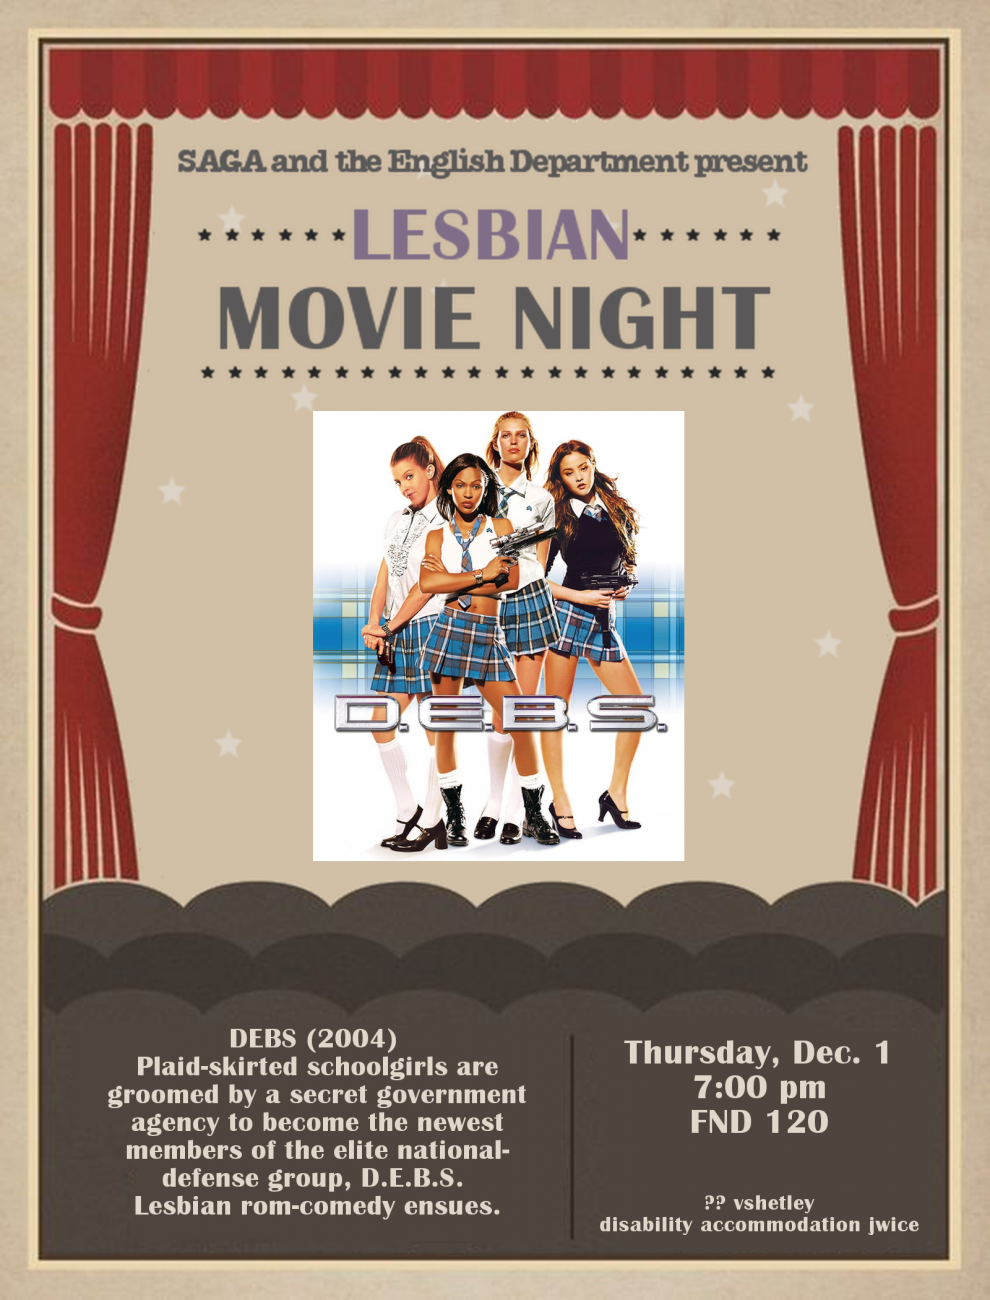 SAGA and the English Department present "Lesbian Movie Night"